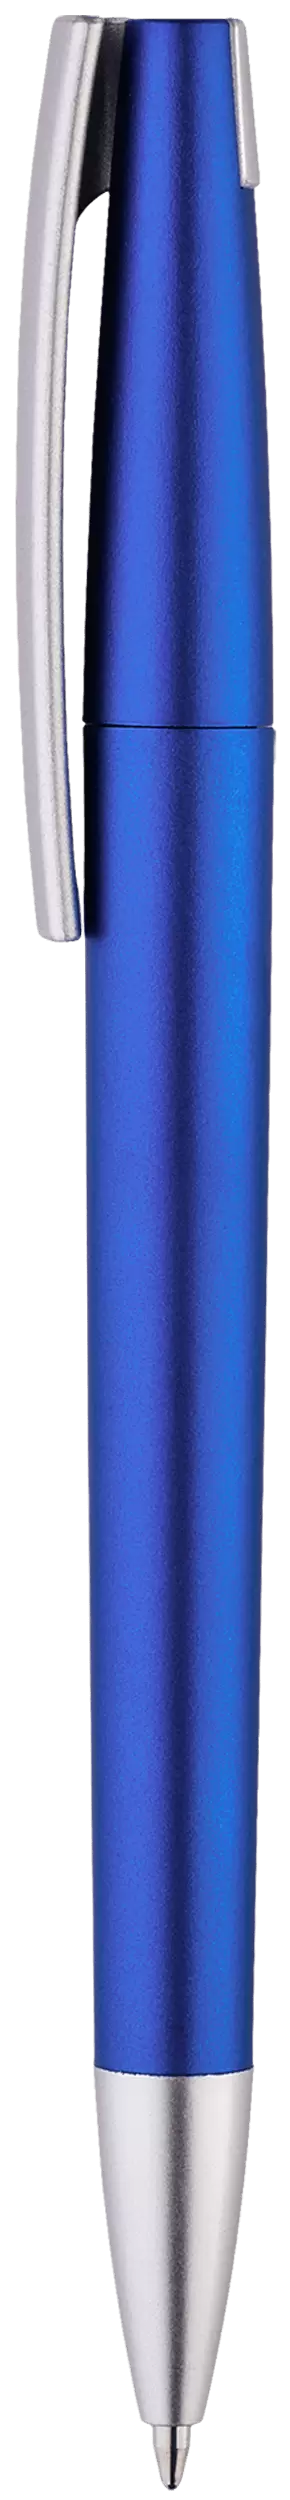 Ручка ZETA METALLIC Синяя 1014-01